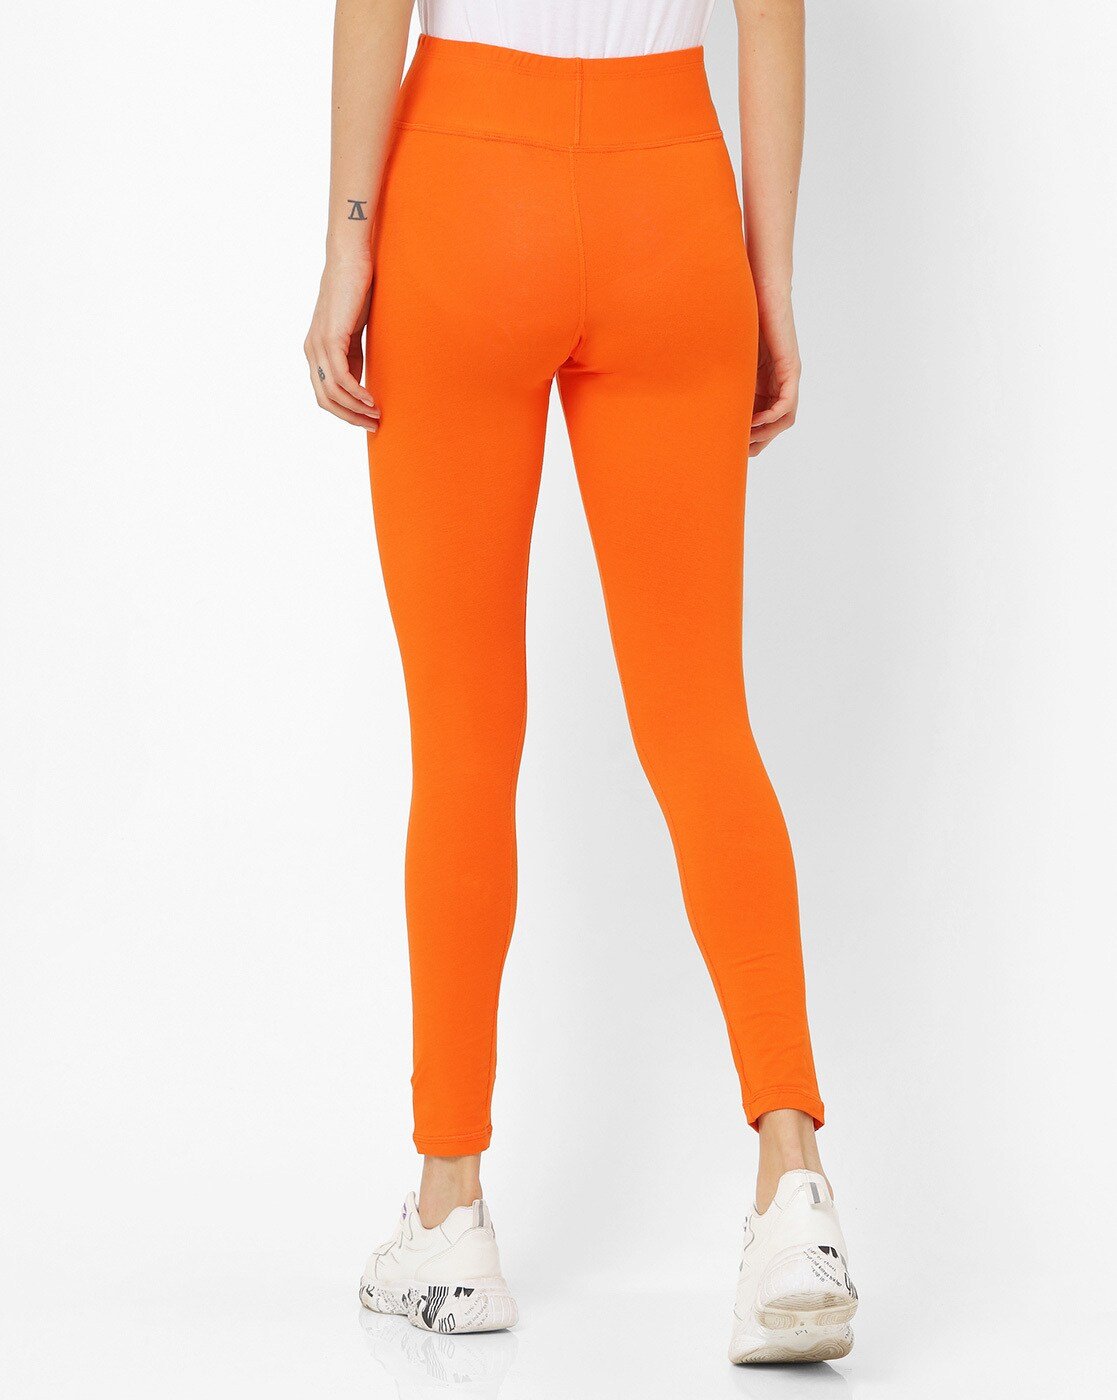 Trendy Women Cotton Lycra Ankle Length Leggings Orange